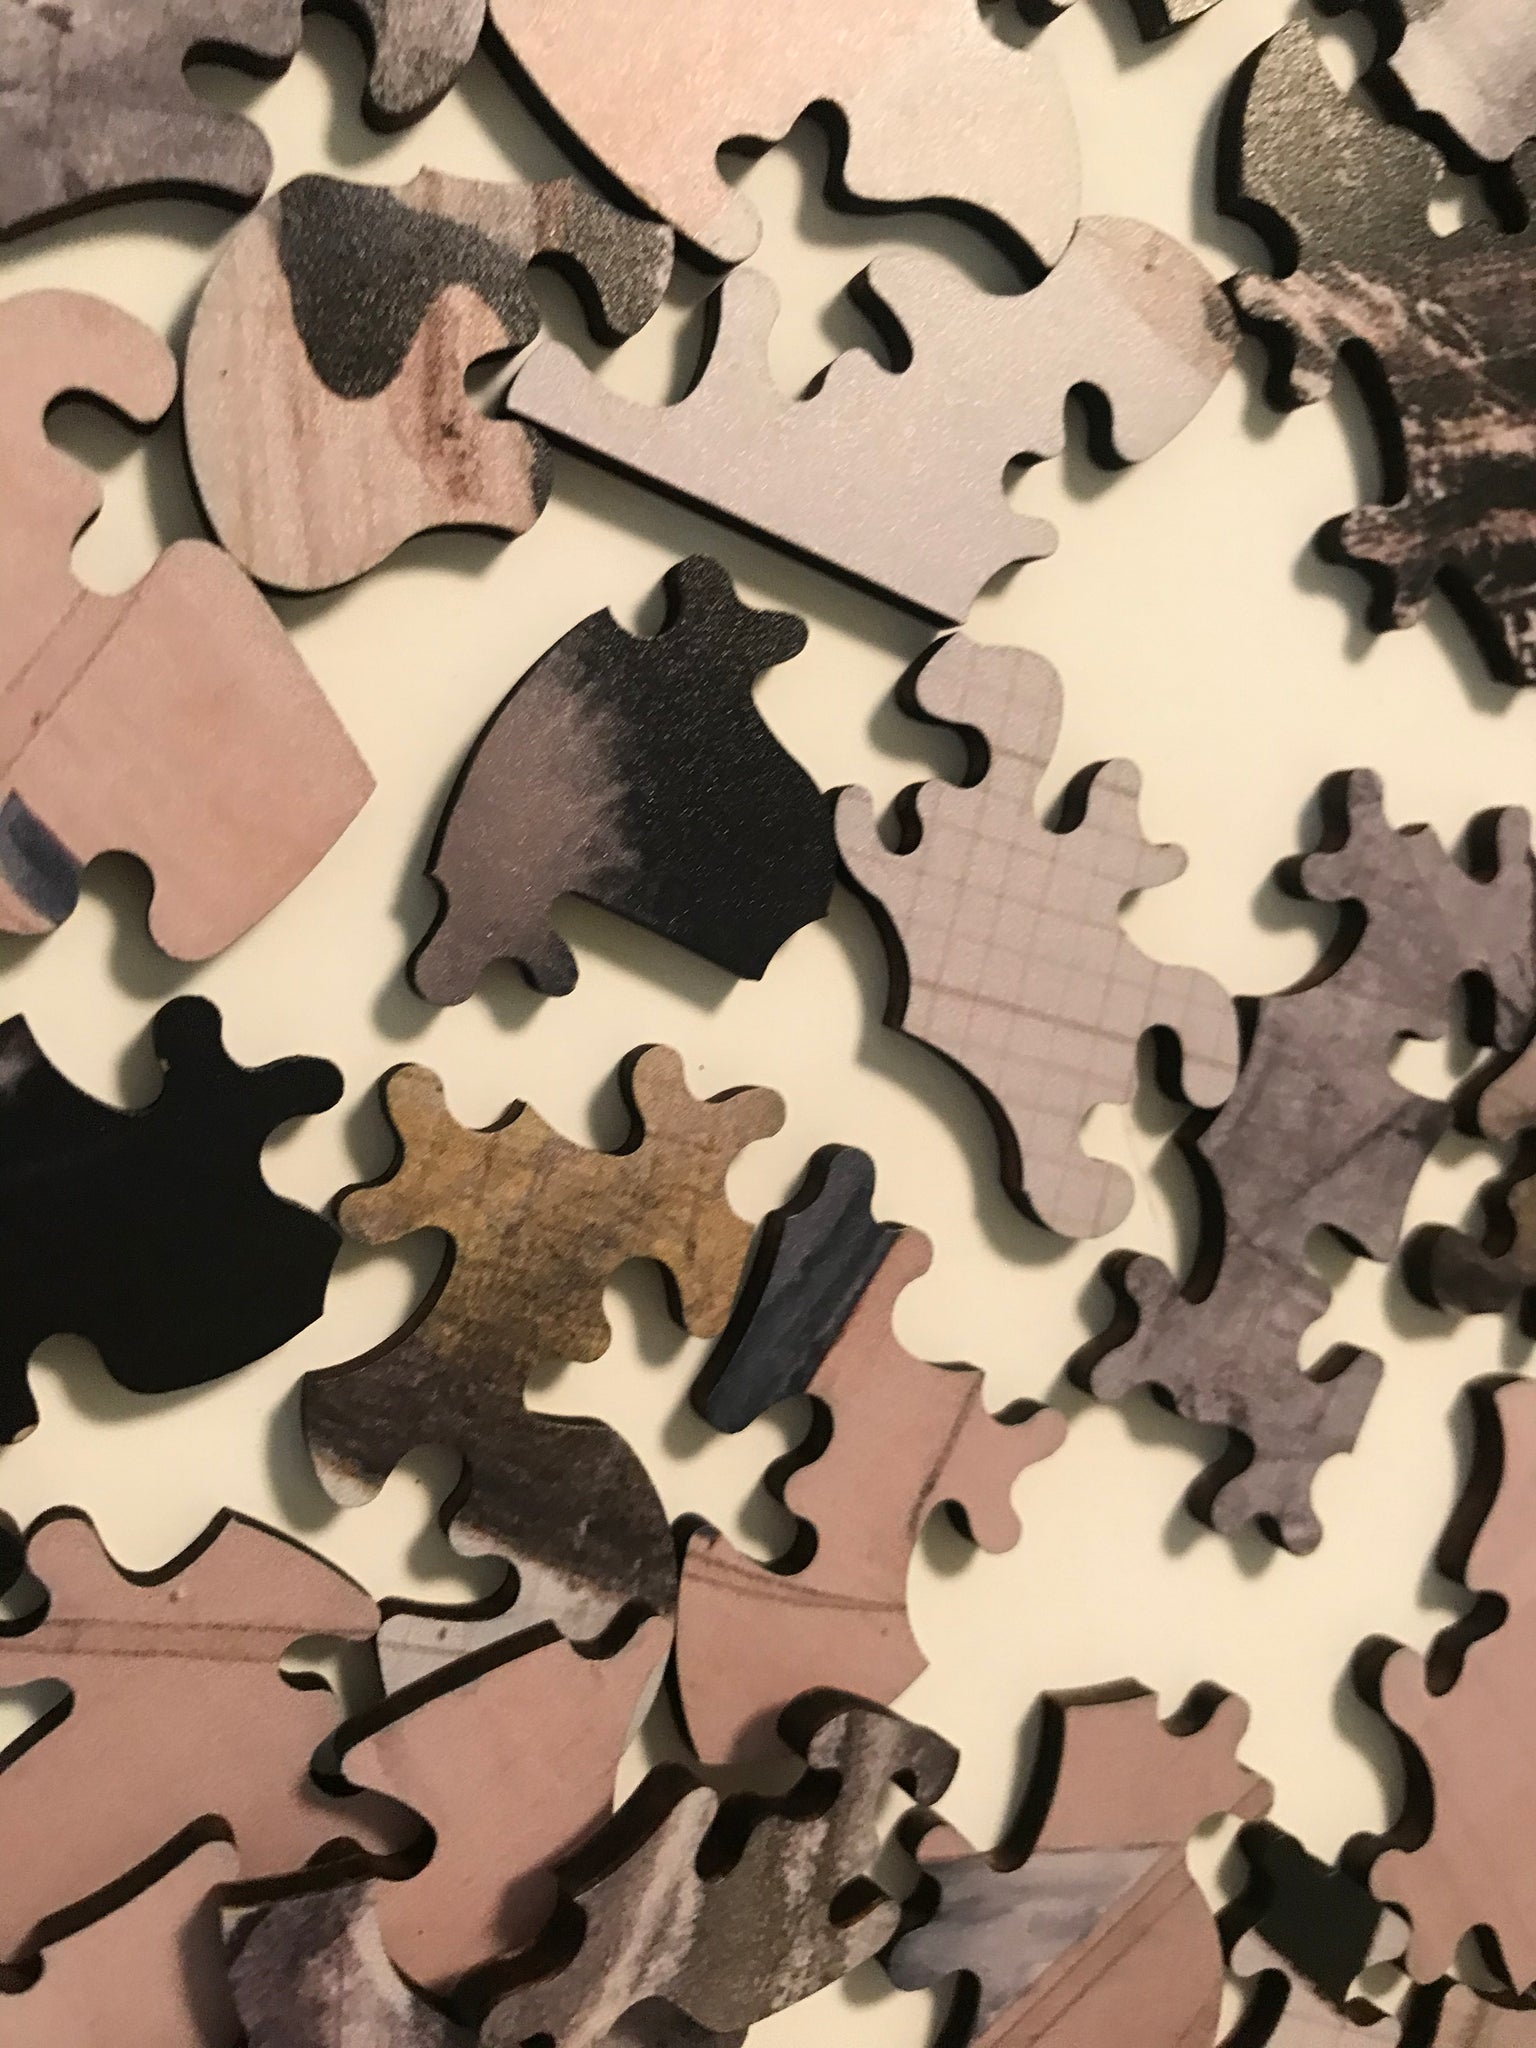 Artist Jitish Kallat Victorian-Cut Collector Edition Wooden Jigsaw Puzzle